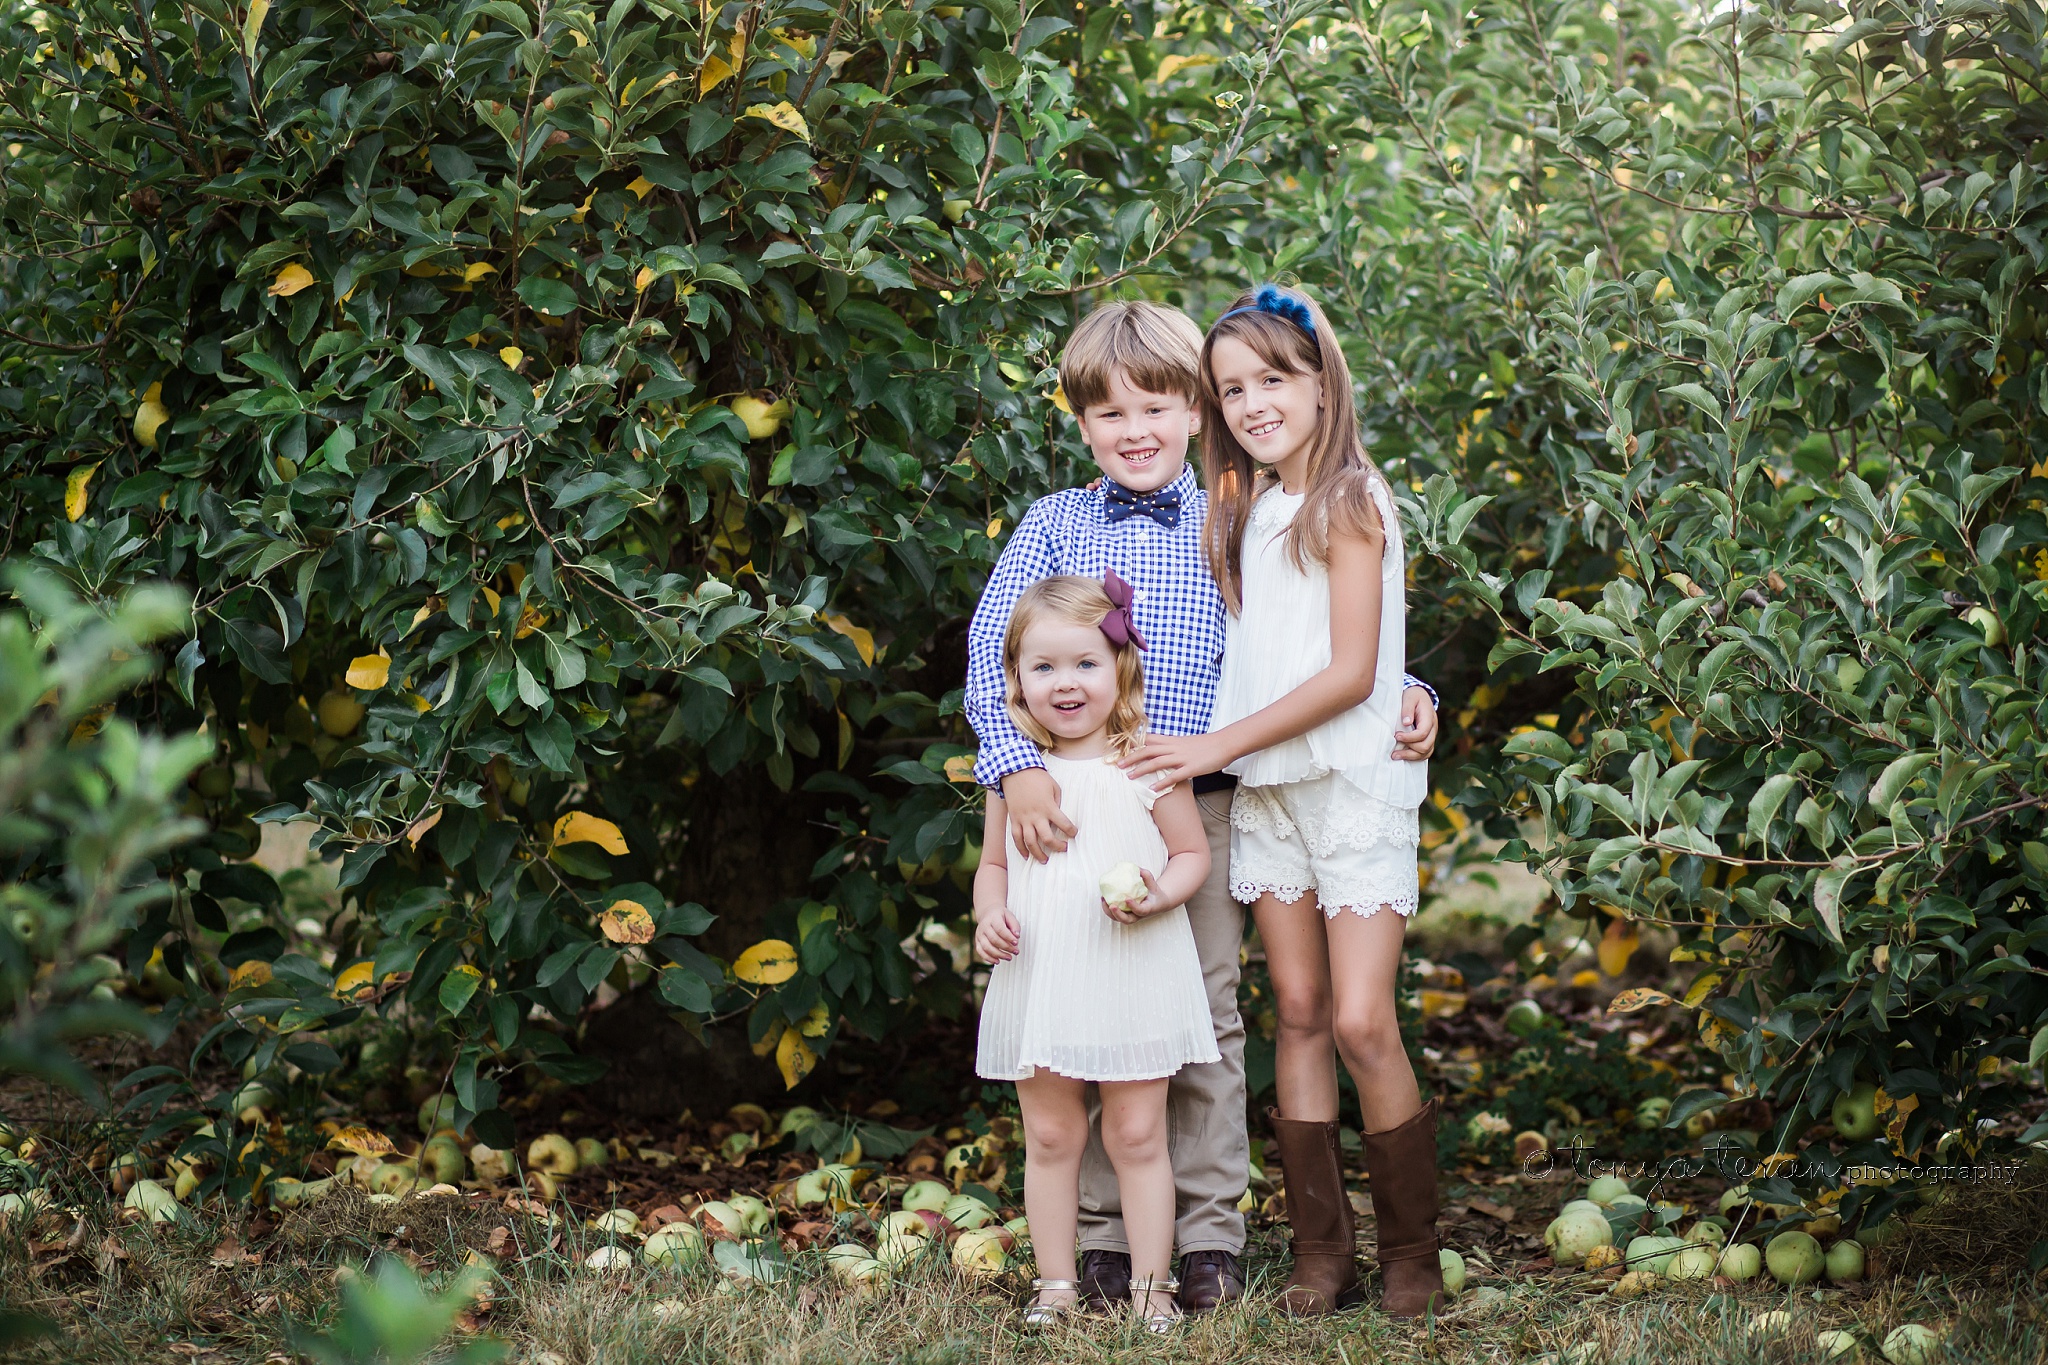 Outdoor Fall Family Photo Session | Tonya Teran Photography, Bethesda, MD Newborn, Baby, and Family Photographer